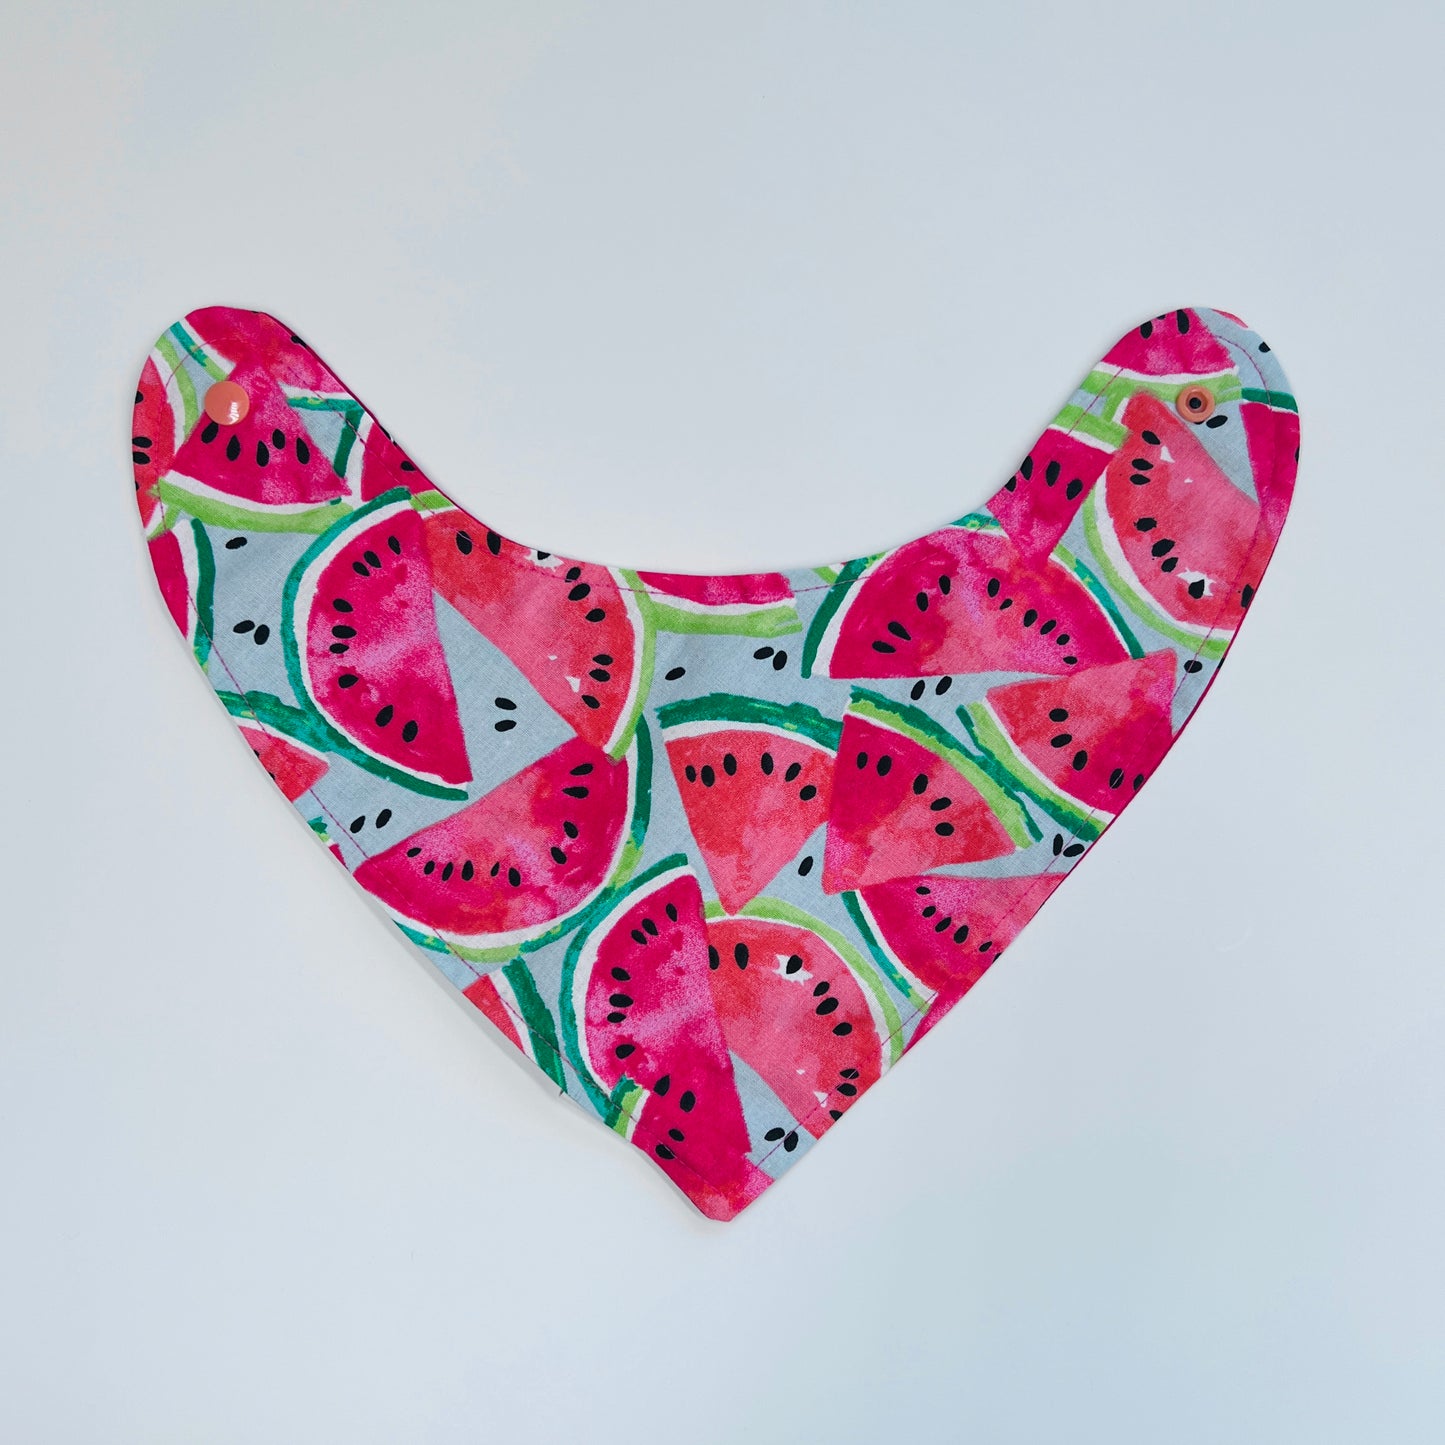 Reversible Bandana Bib "Watermelon"